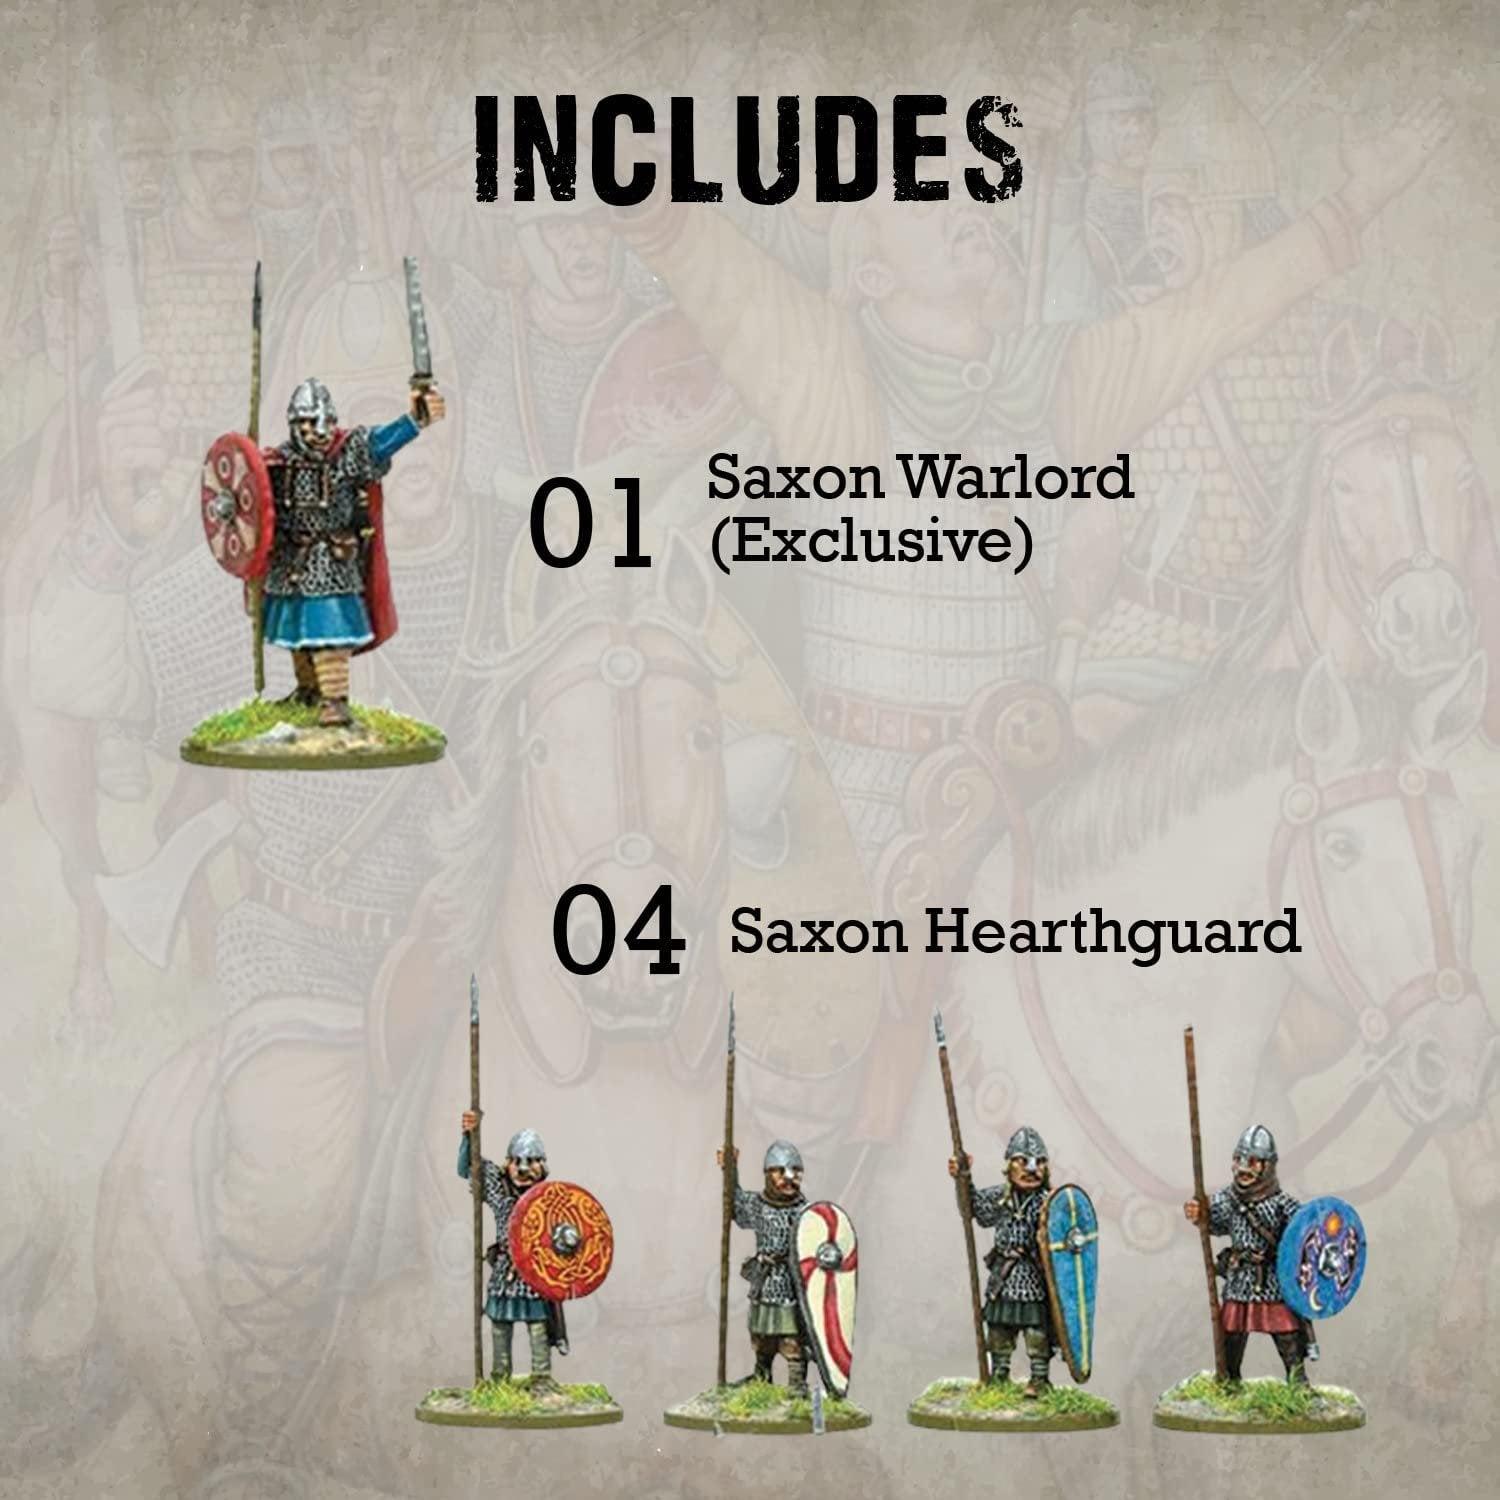 Hail Caesar - The Dark Ages: Saxon Starter Army